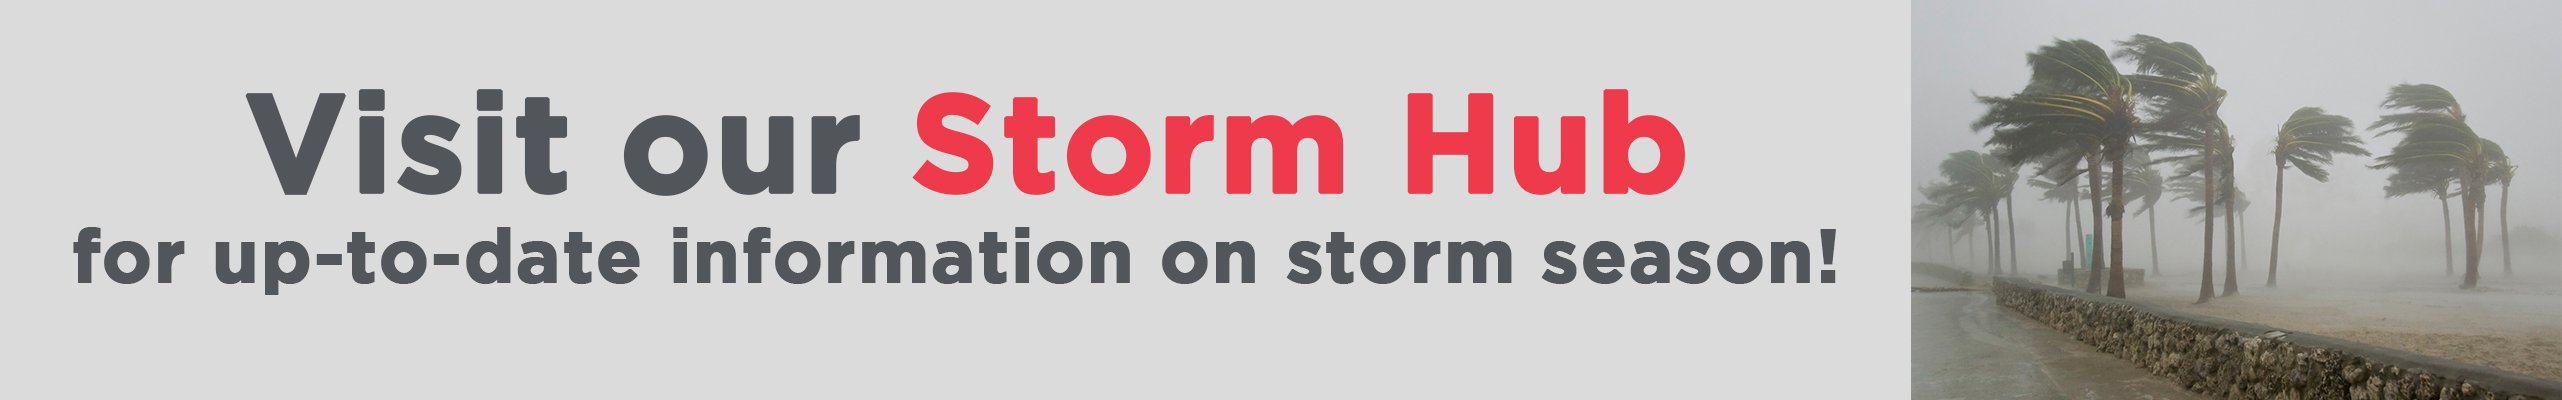 Storm Season Hotwire